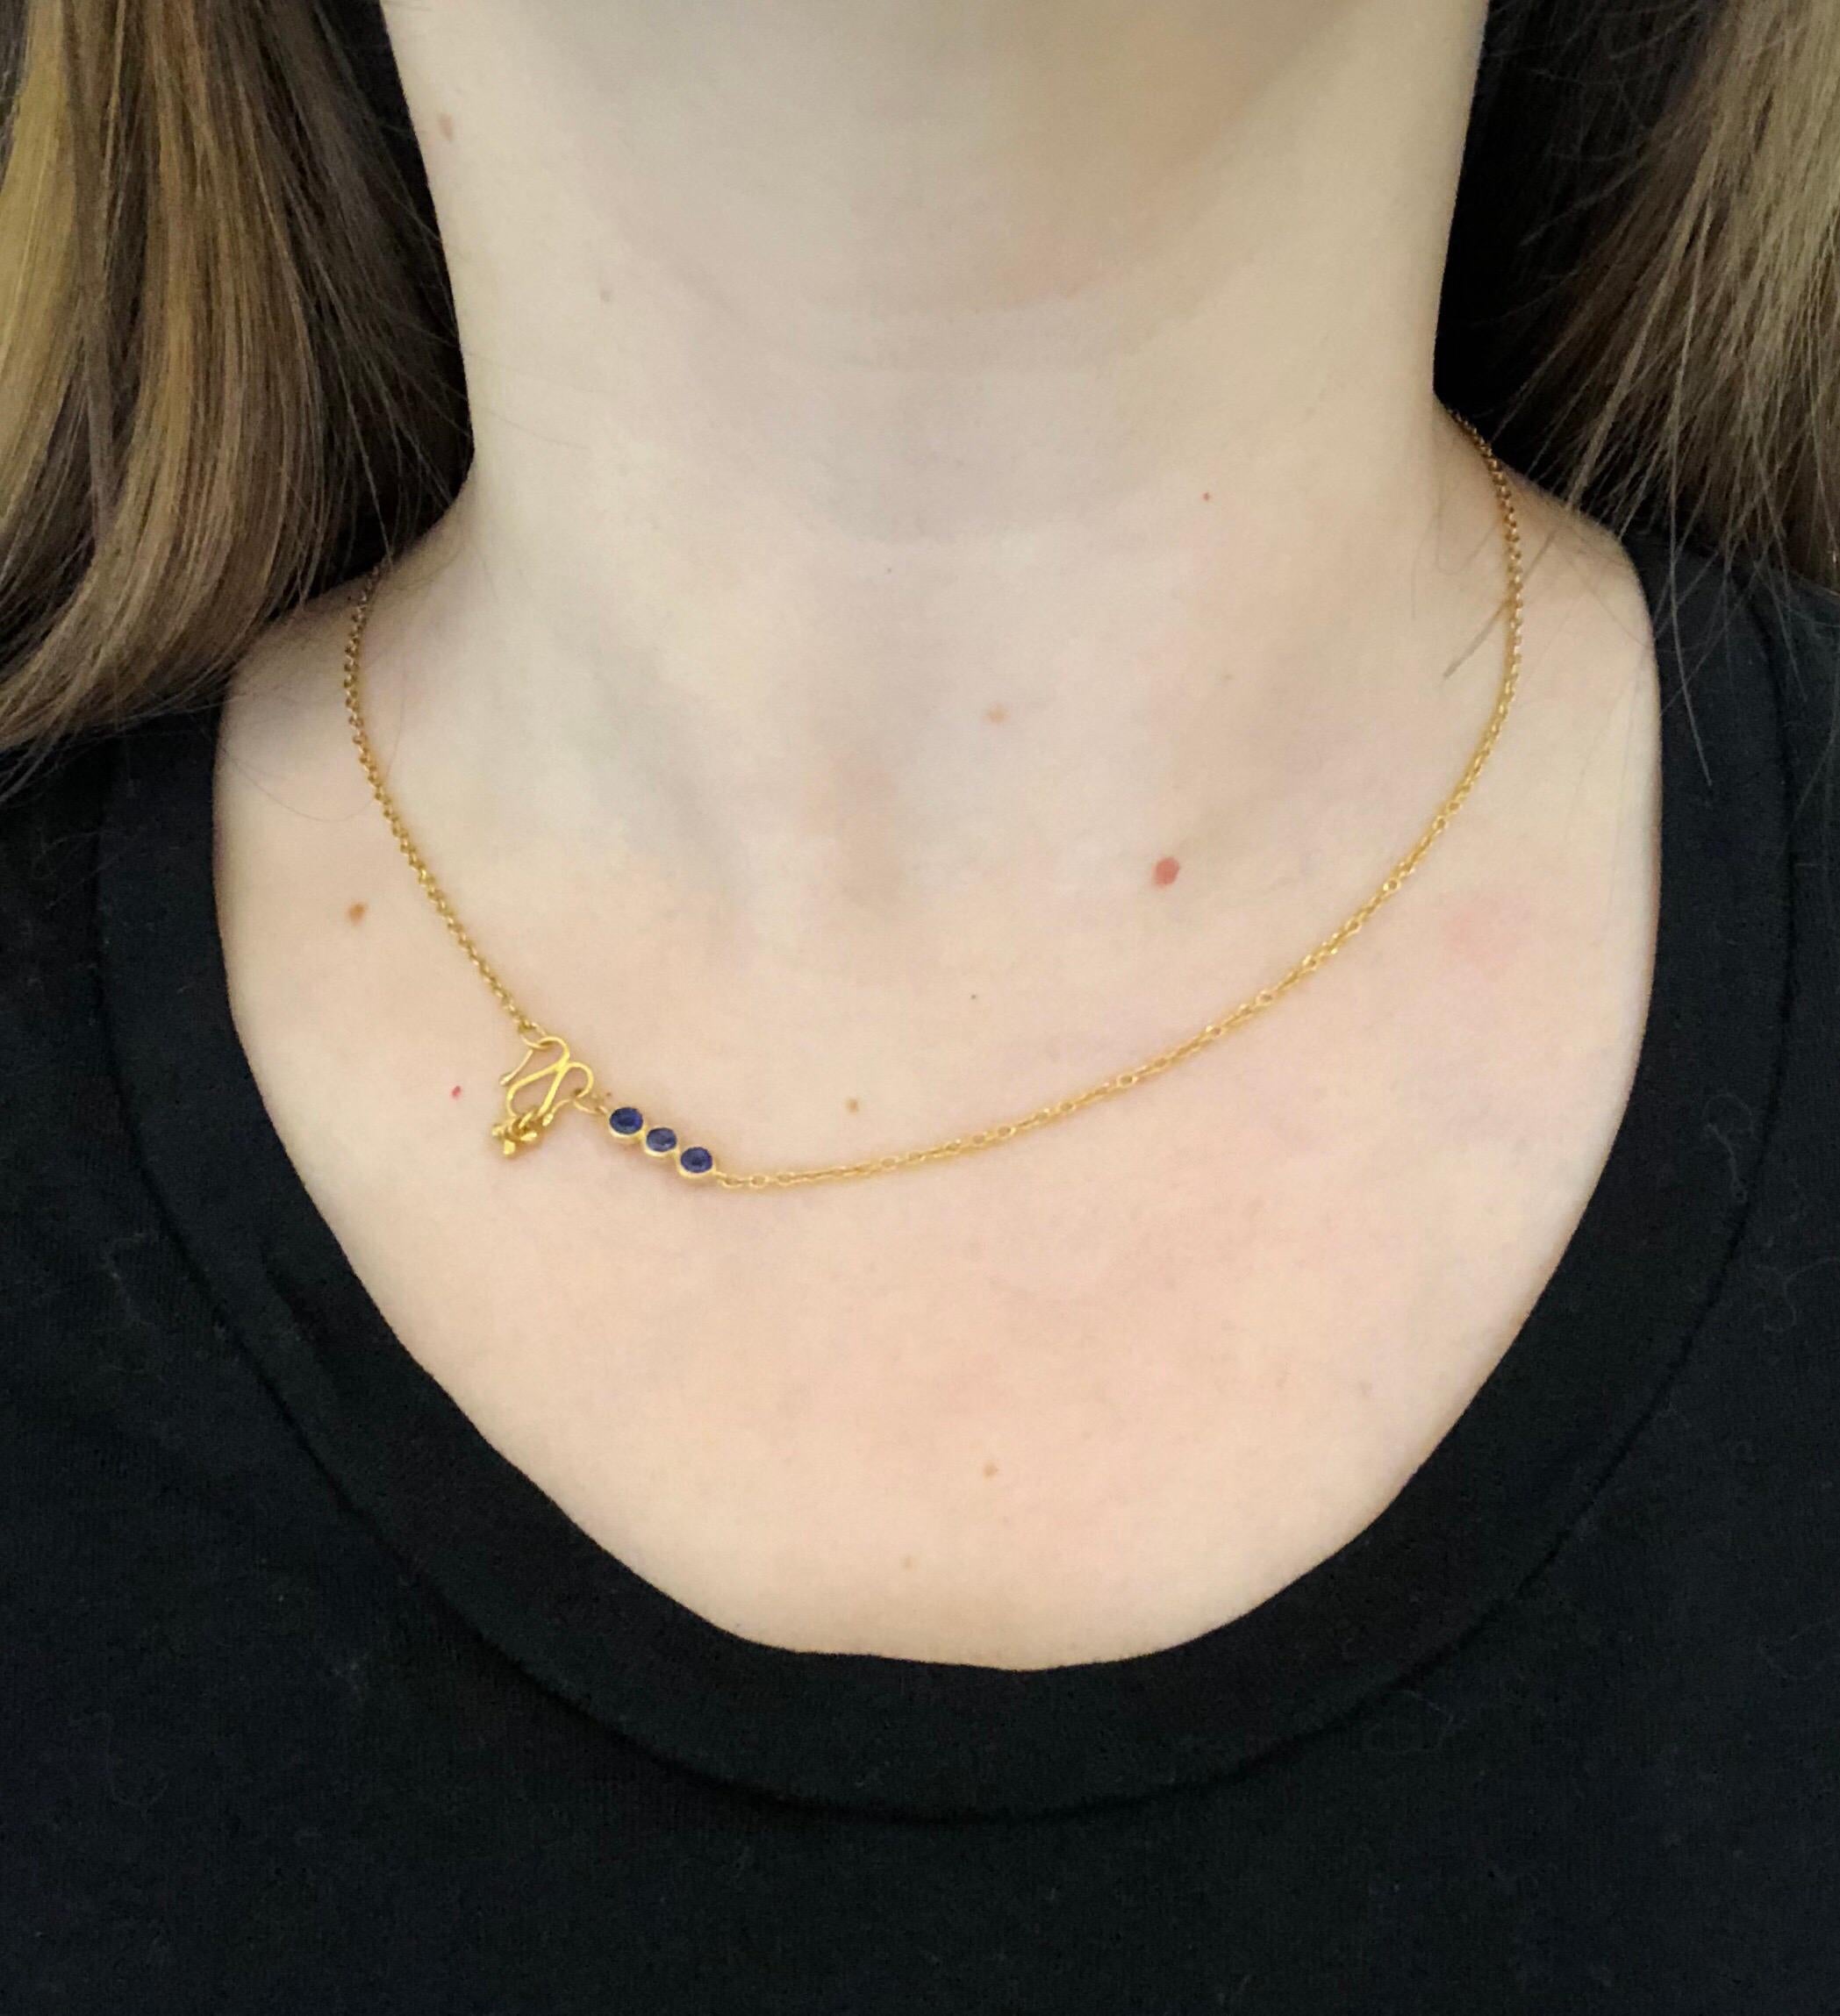 20kt gold pendant necklace handmade